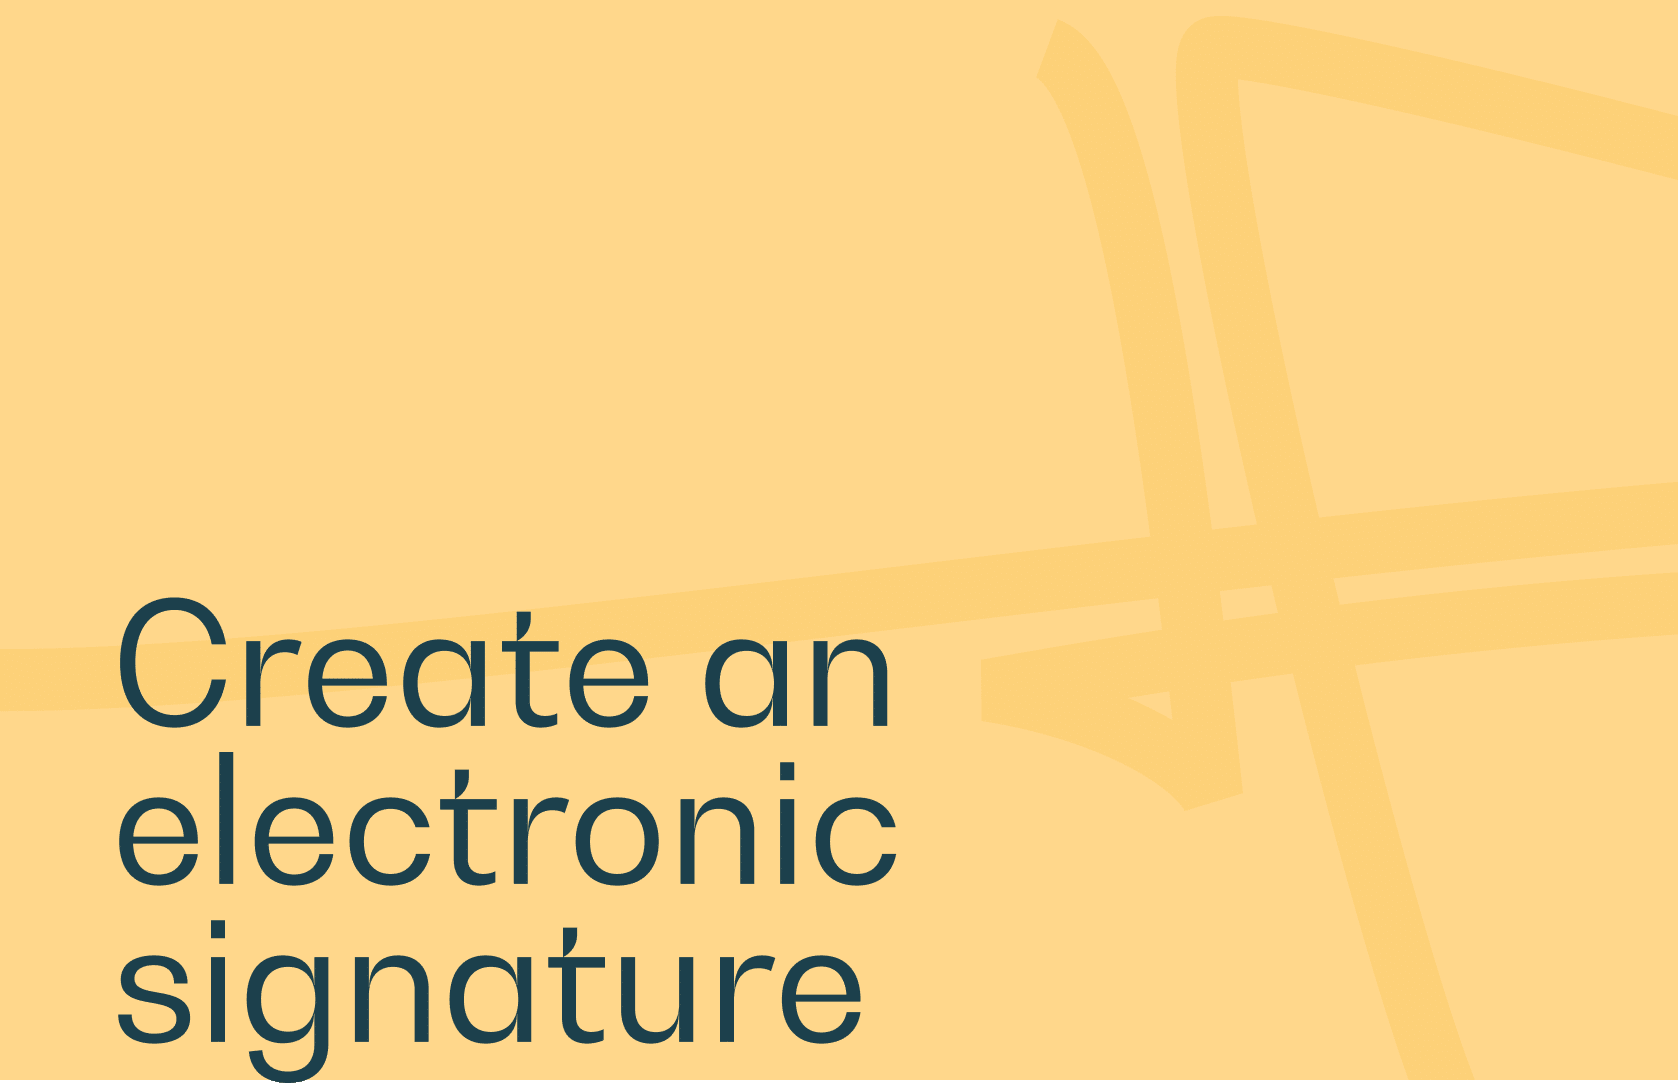 Create an electronic signature